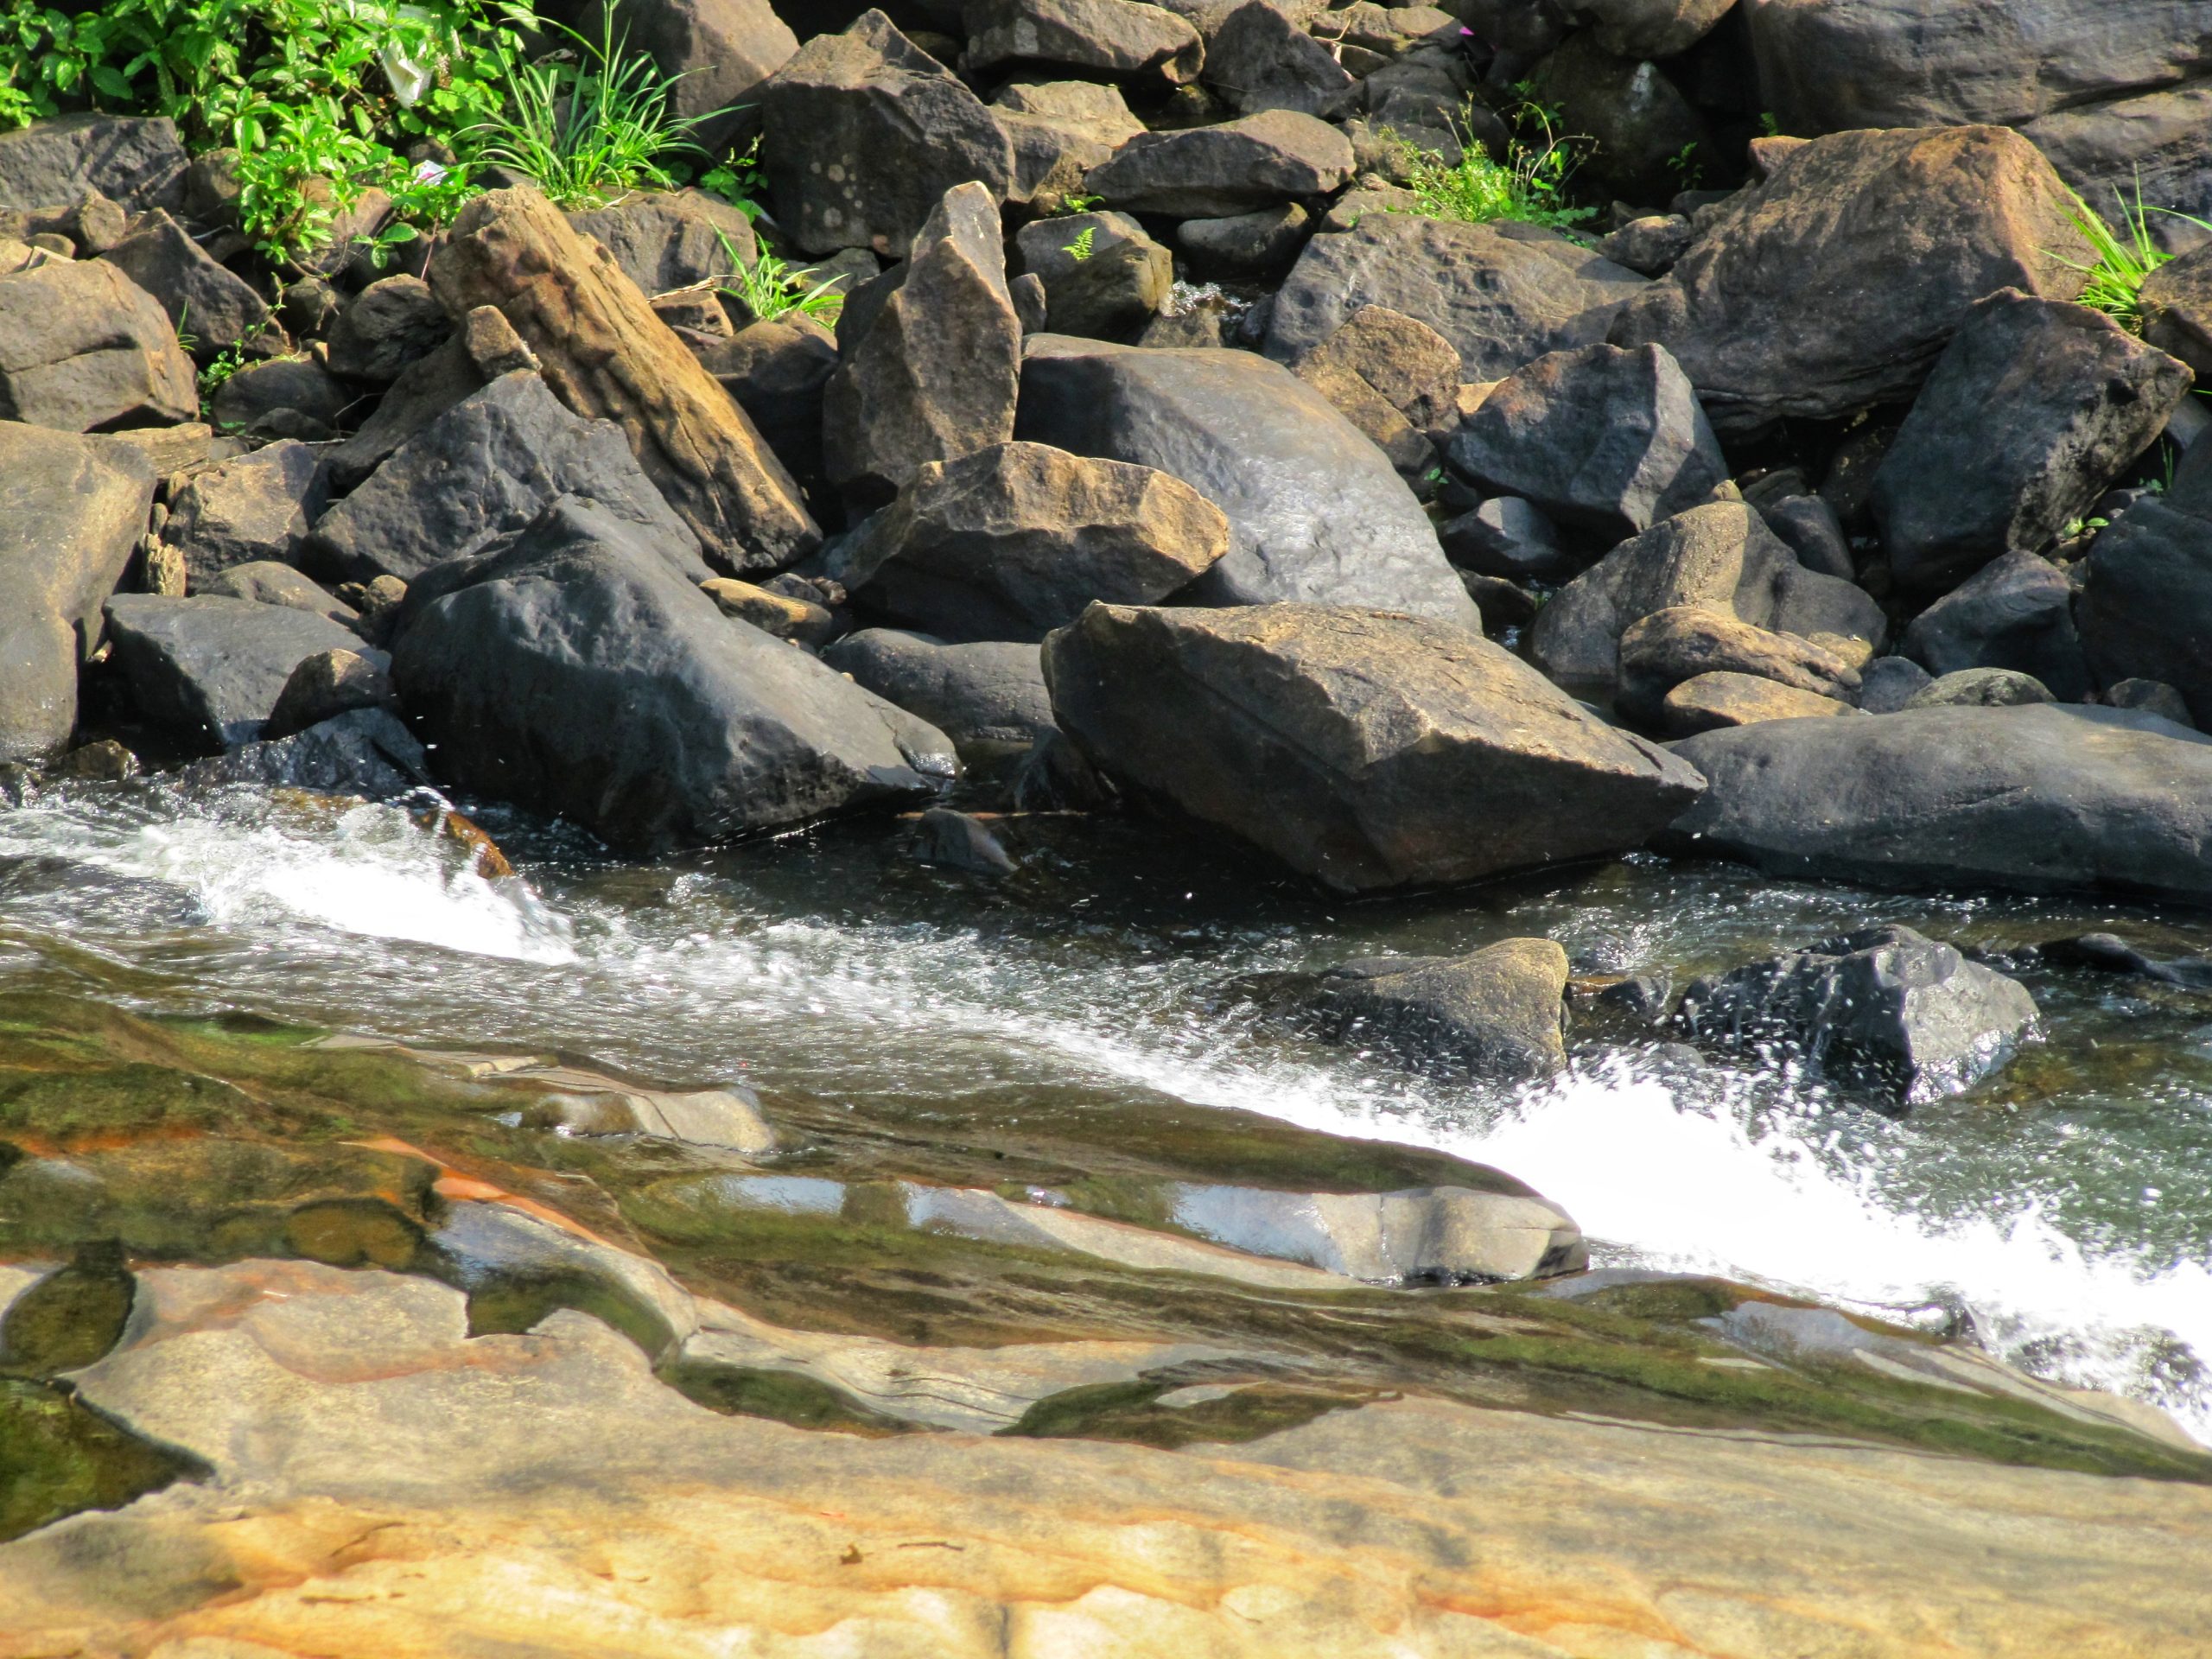 A river flowing through rocks